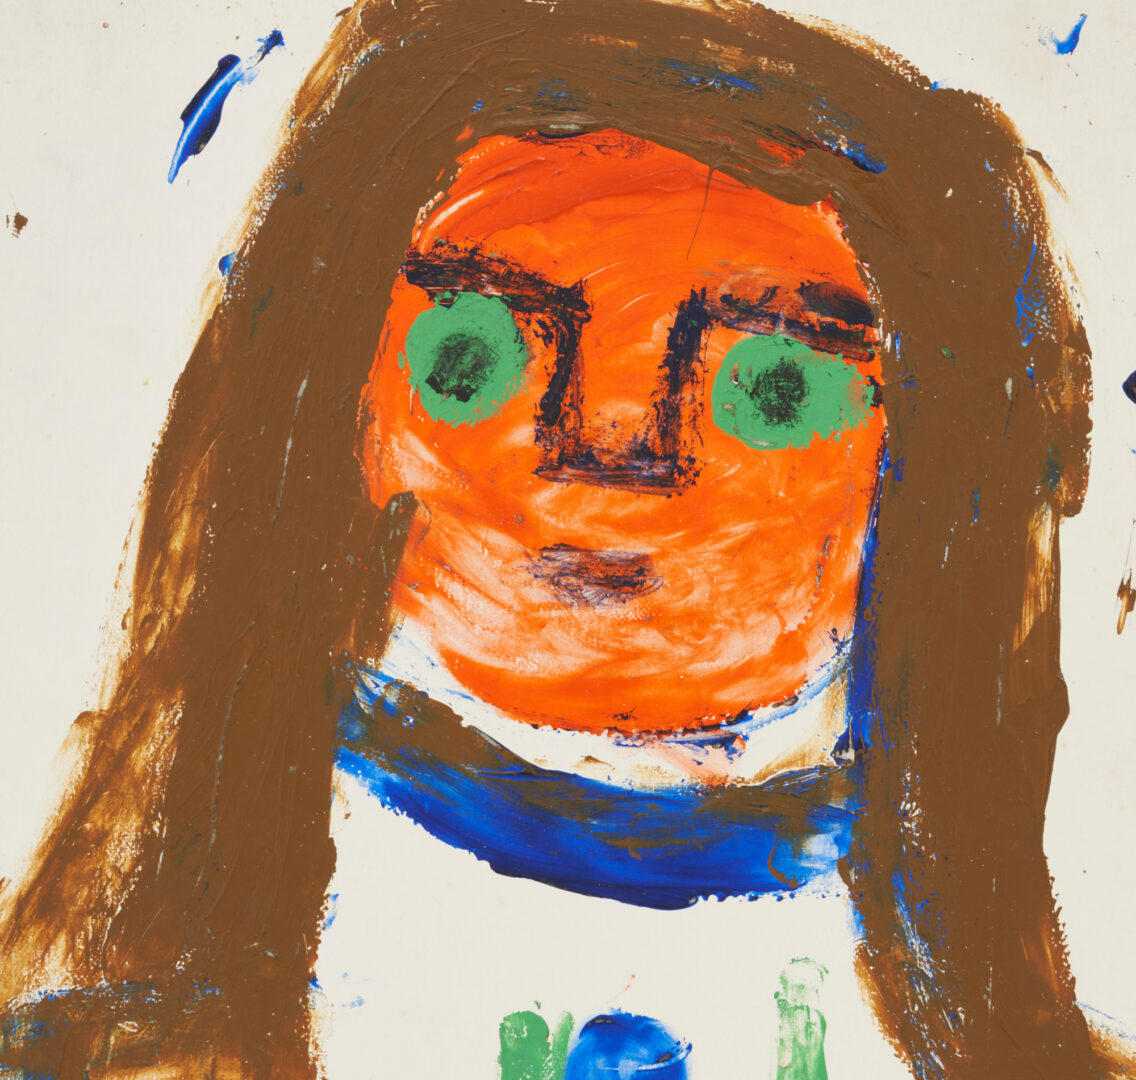 Lot 174: Eddy Mumma Outsider Art Painting, Figure w/ Orange Face